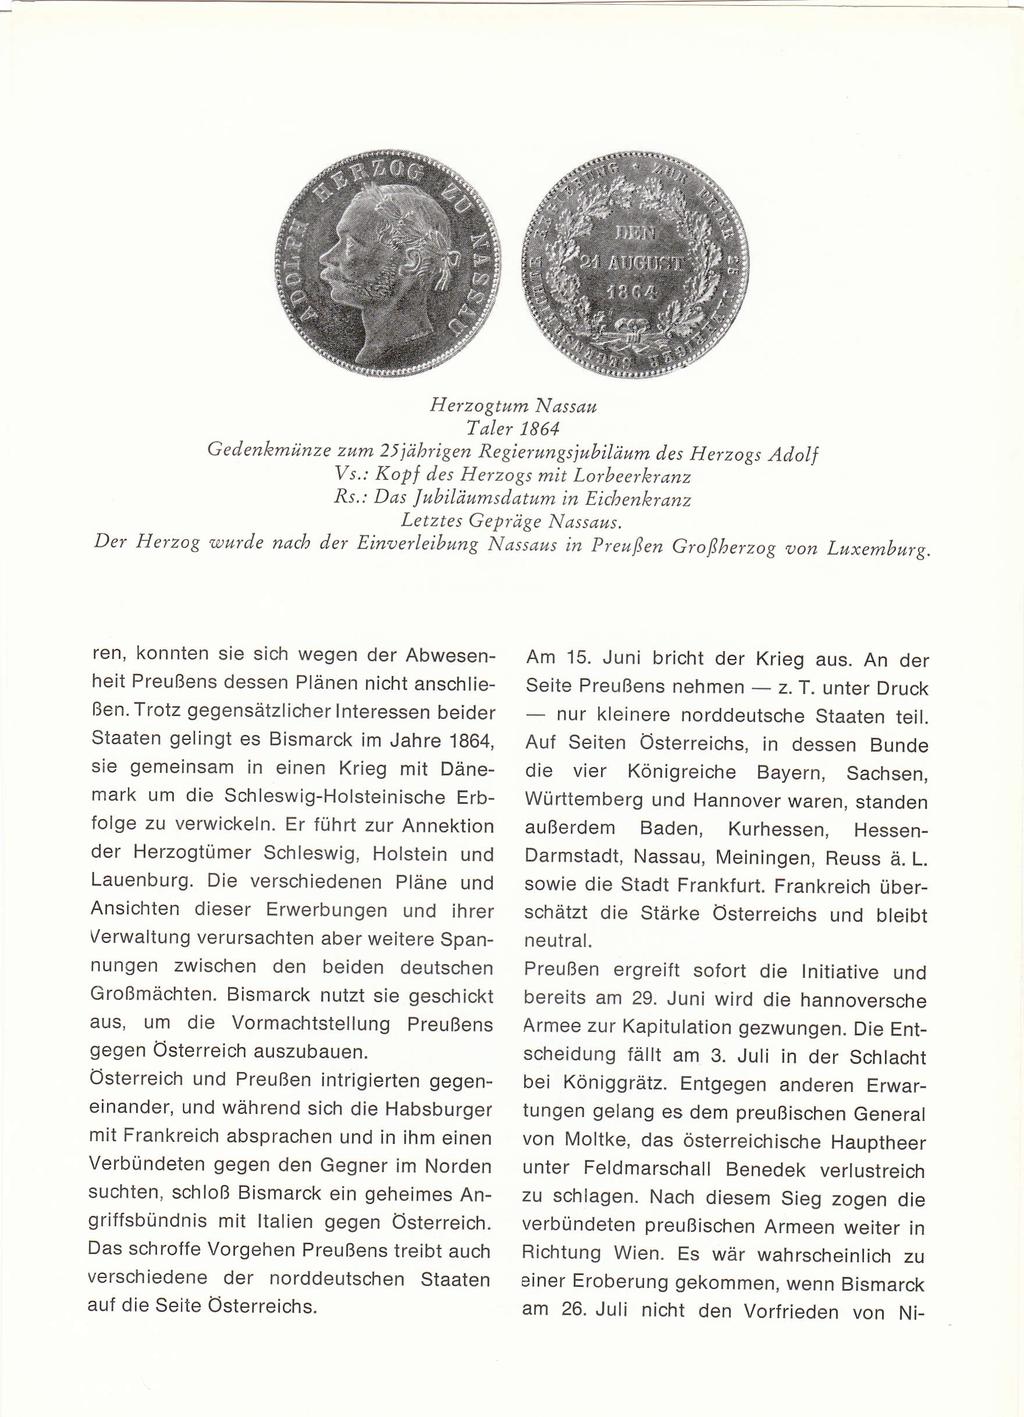 Herzogtnn Nassaw Taler 1864 Ged.enkmünze zwm 25 jährigen Regierwngsjwbiläutn des Herzogs Adolf Vs.: Kopf des Herzogs tnit Lorbeerkranz Rs.